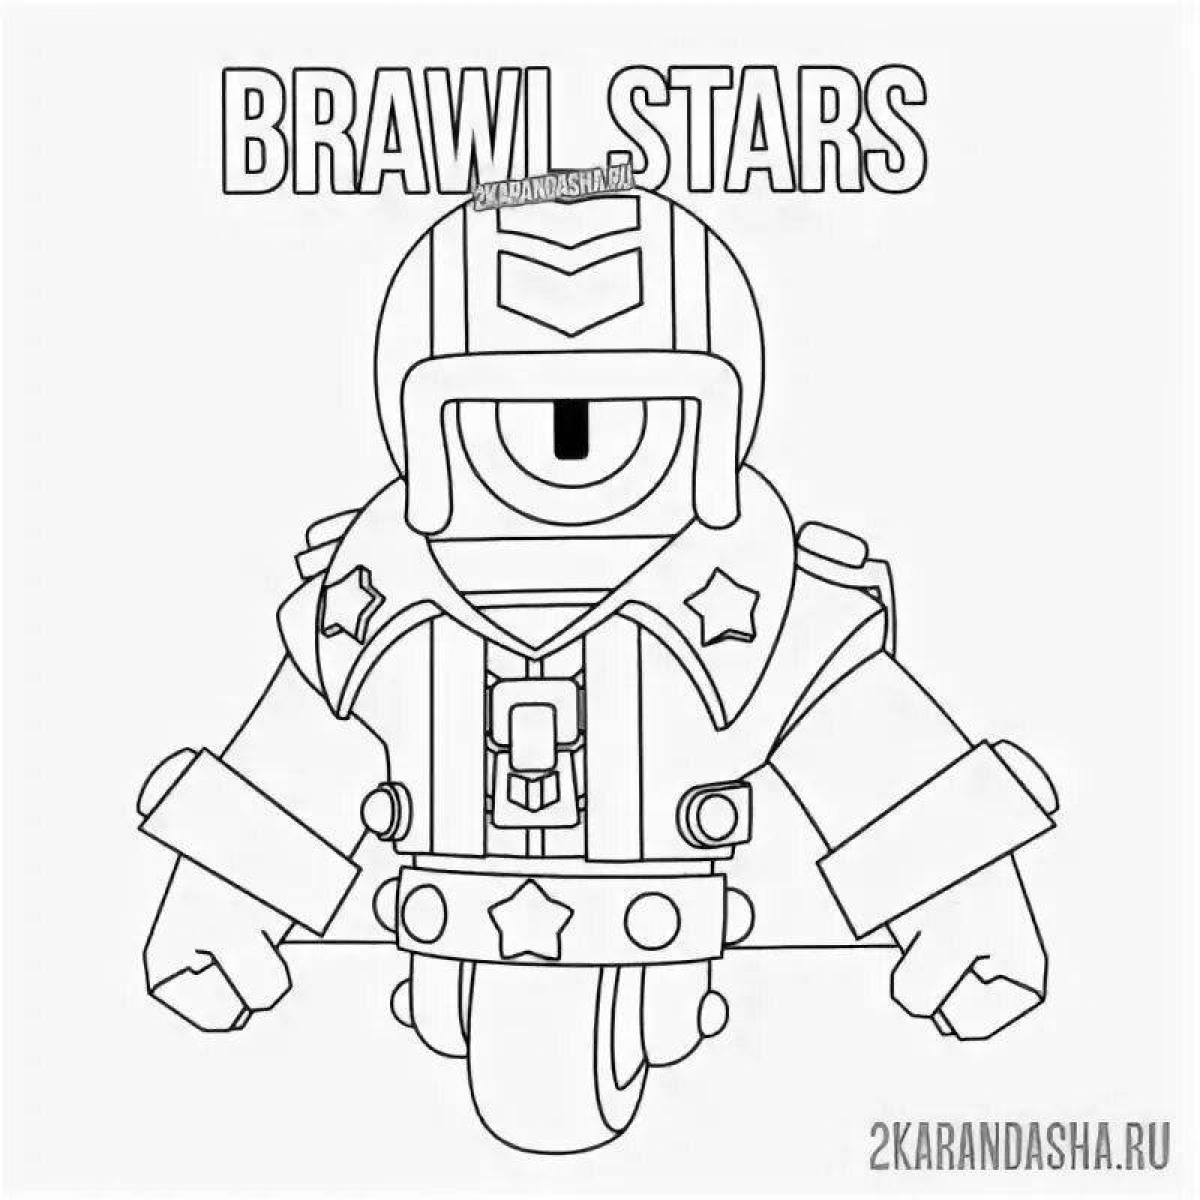 Stu Bravo amazing stars coloring page